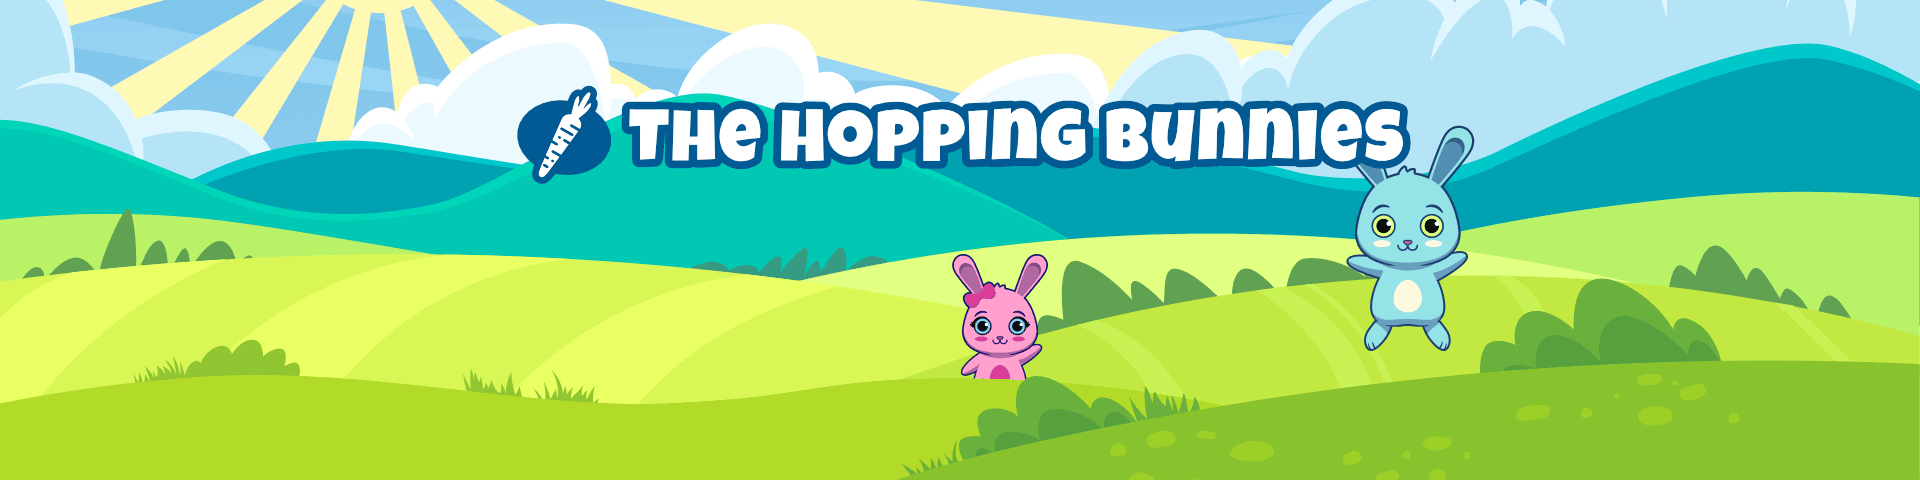 The Hopping Bunnies